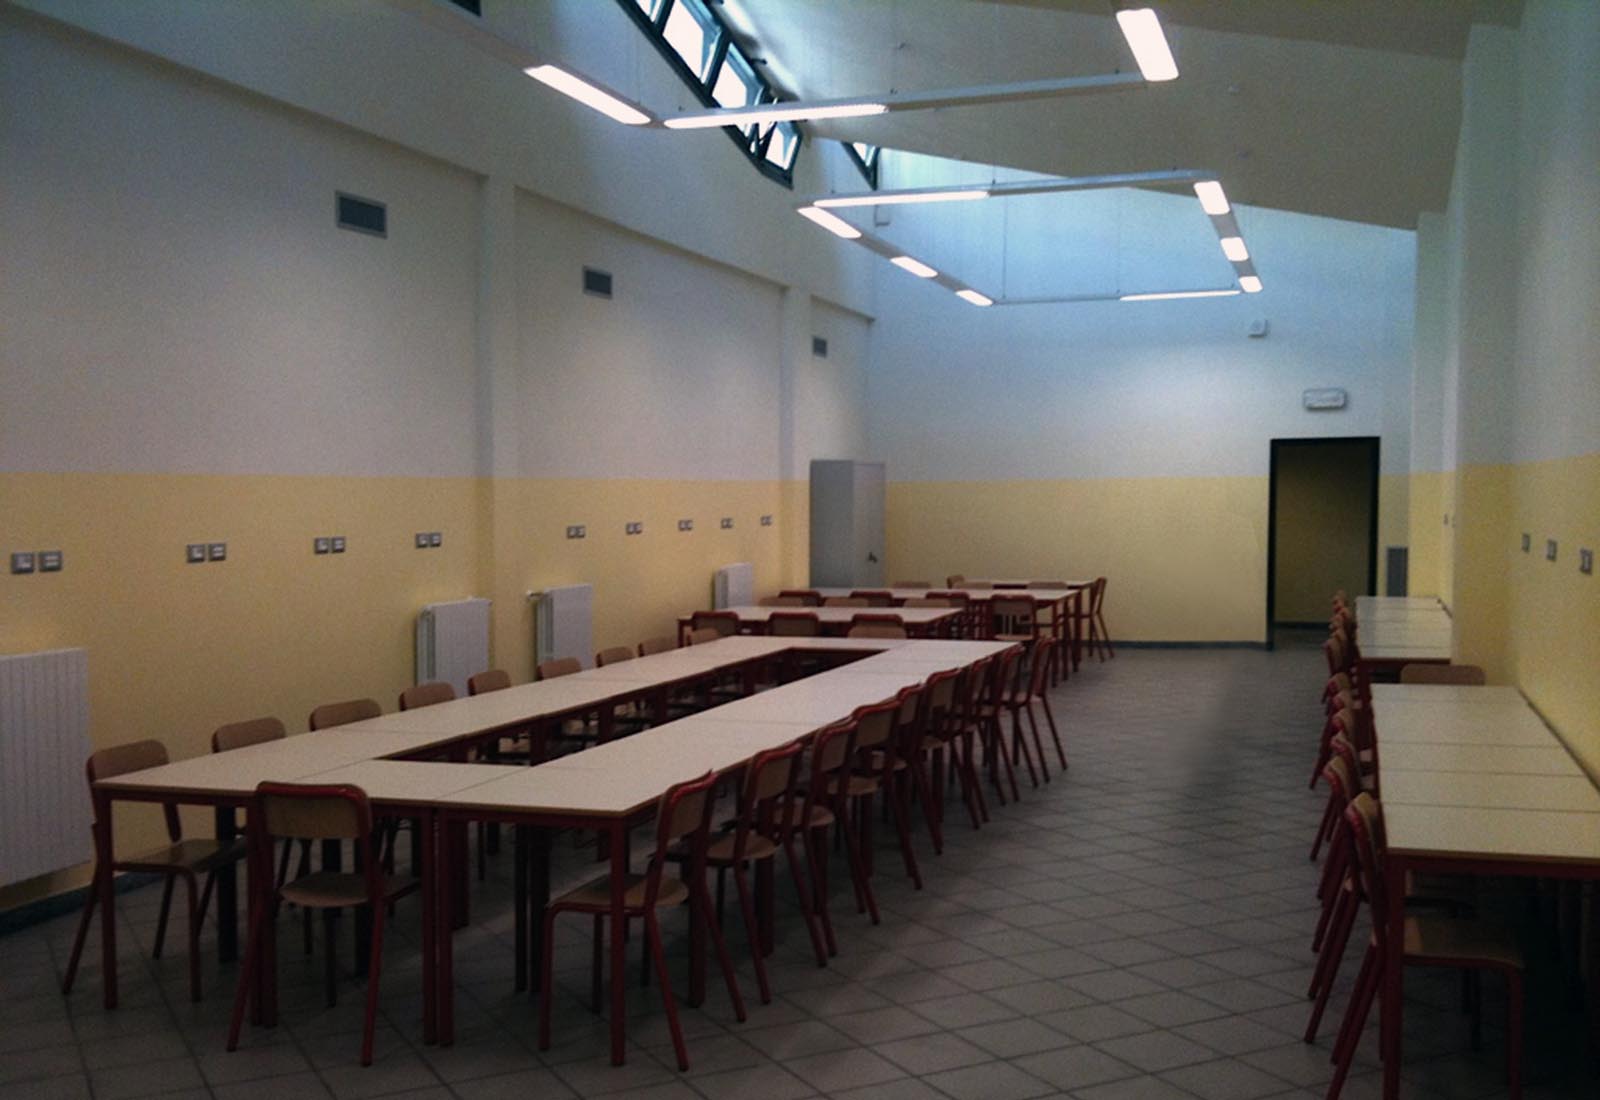 Manzoni school center in Milan - Educational workshop